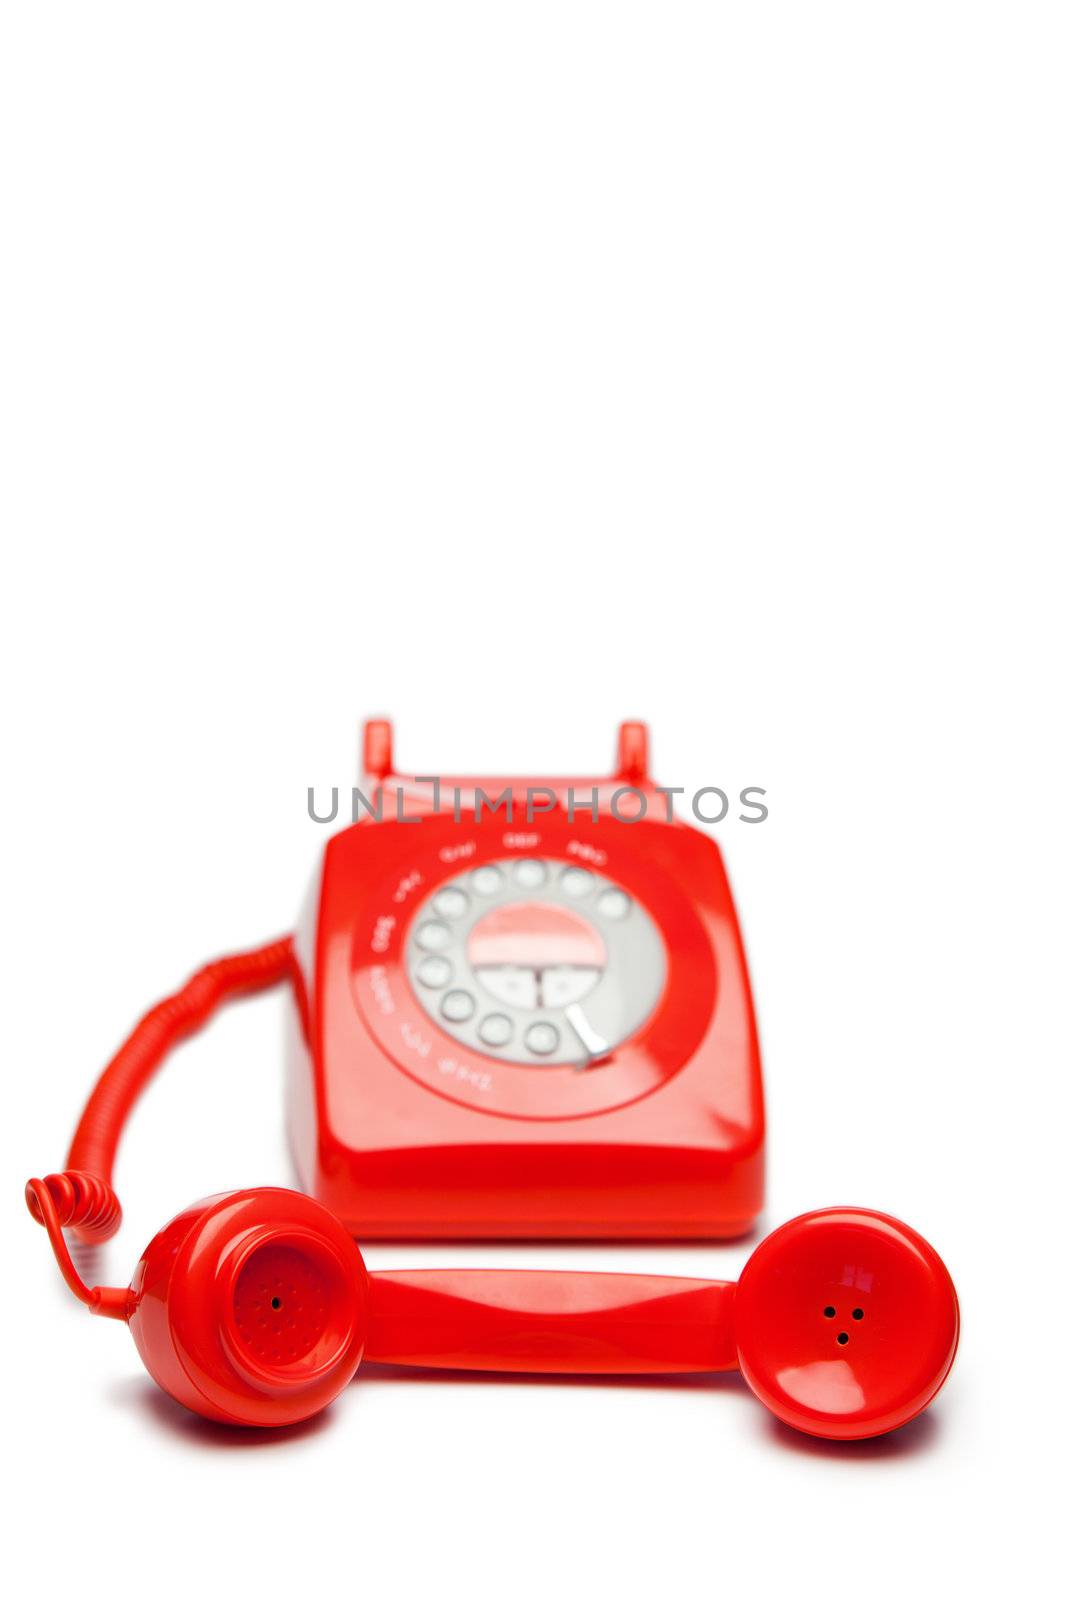 Fashion red telephone by Wavebreakmedia